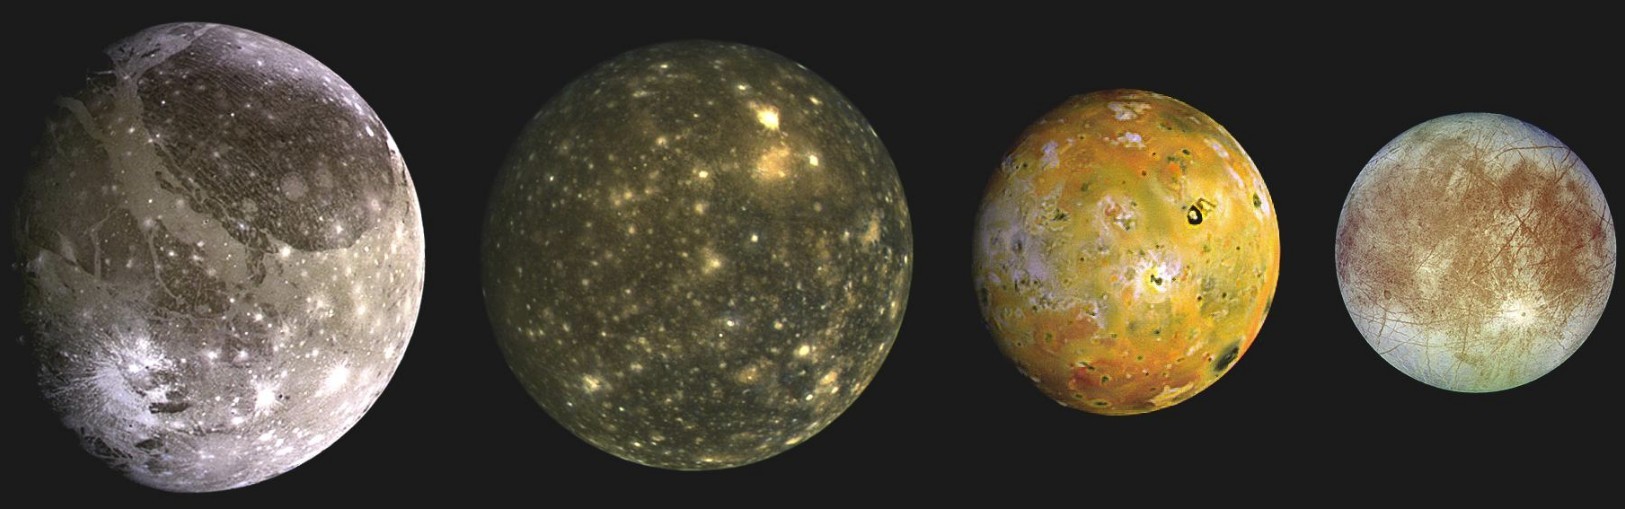 Рис. 1. Галилеевы спутники Юпитера. 